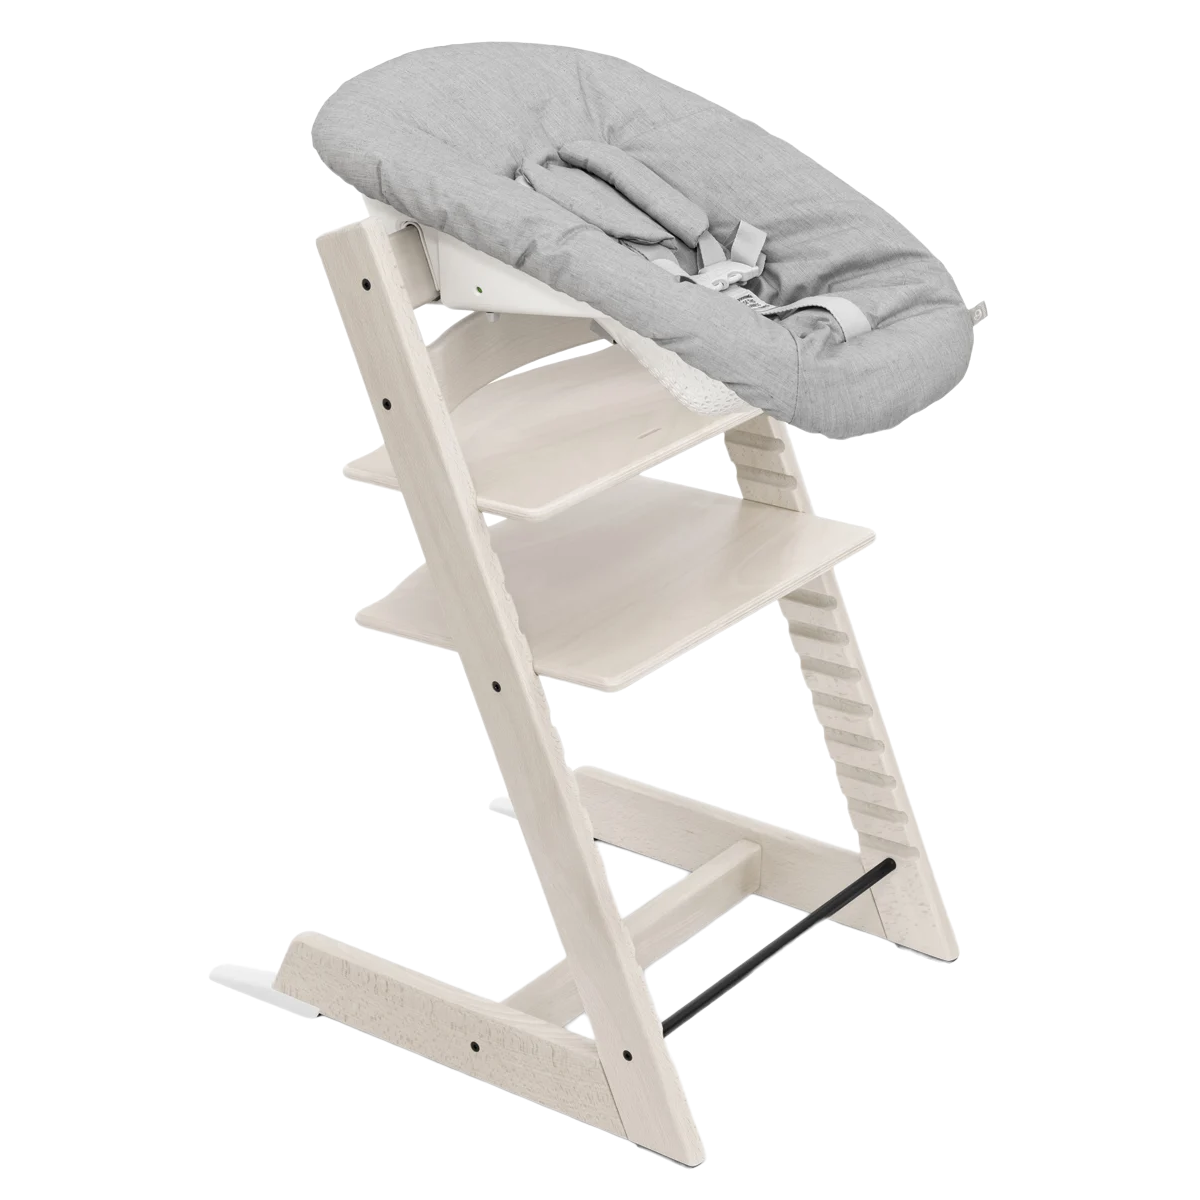 Набор Stokke Newborn Tripp Trapp Whitewash: стульчик и кресло для новорожденных (k.100105.52) - фото 1